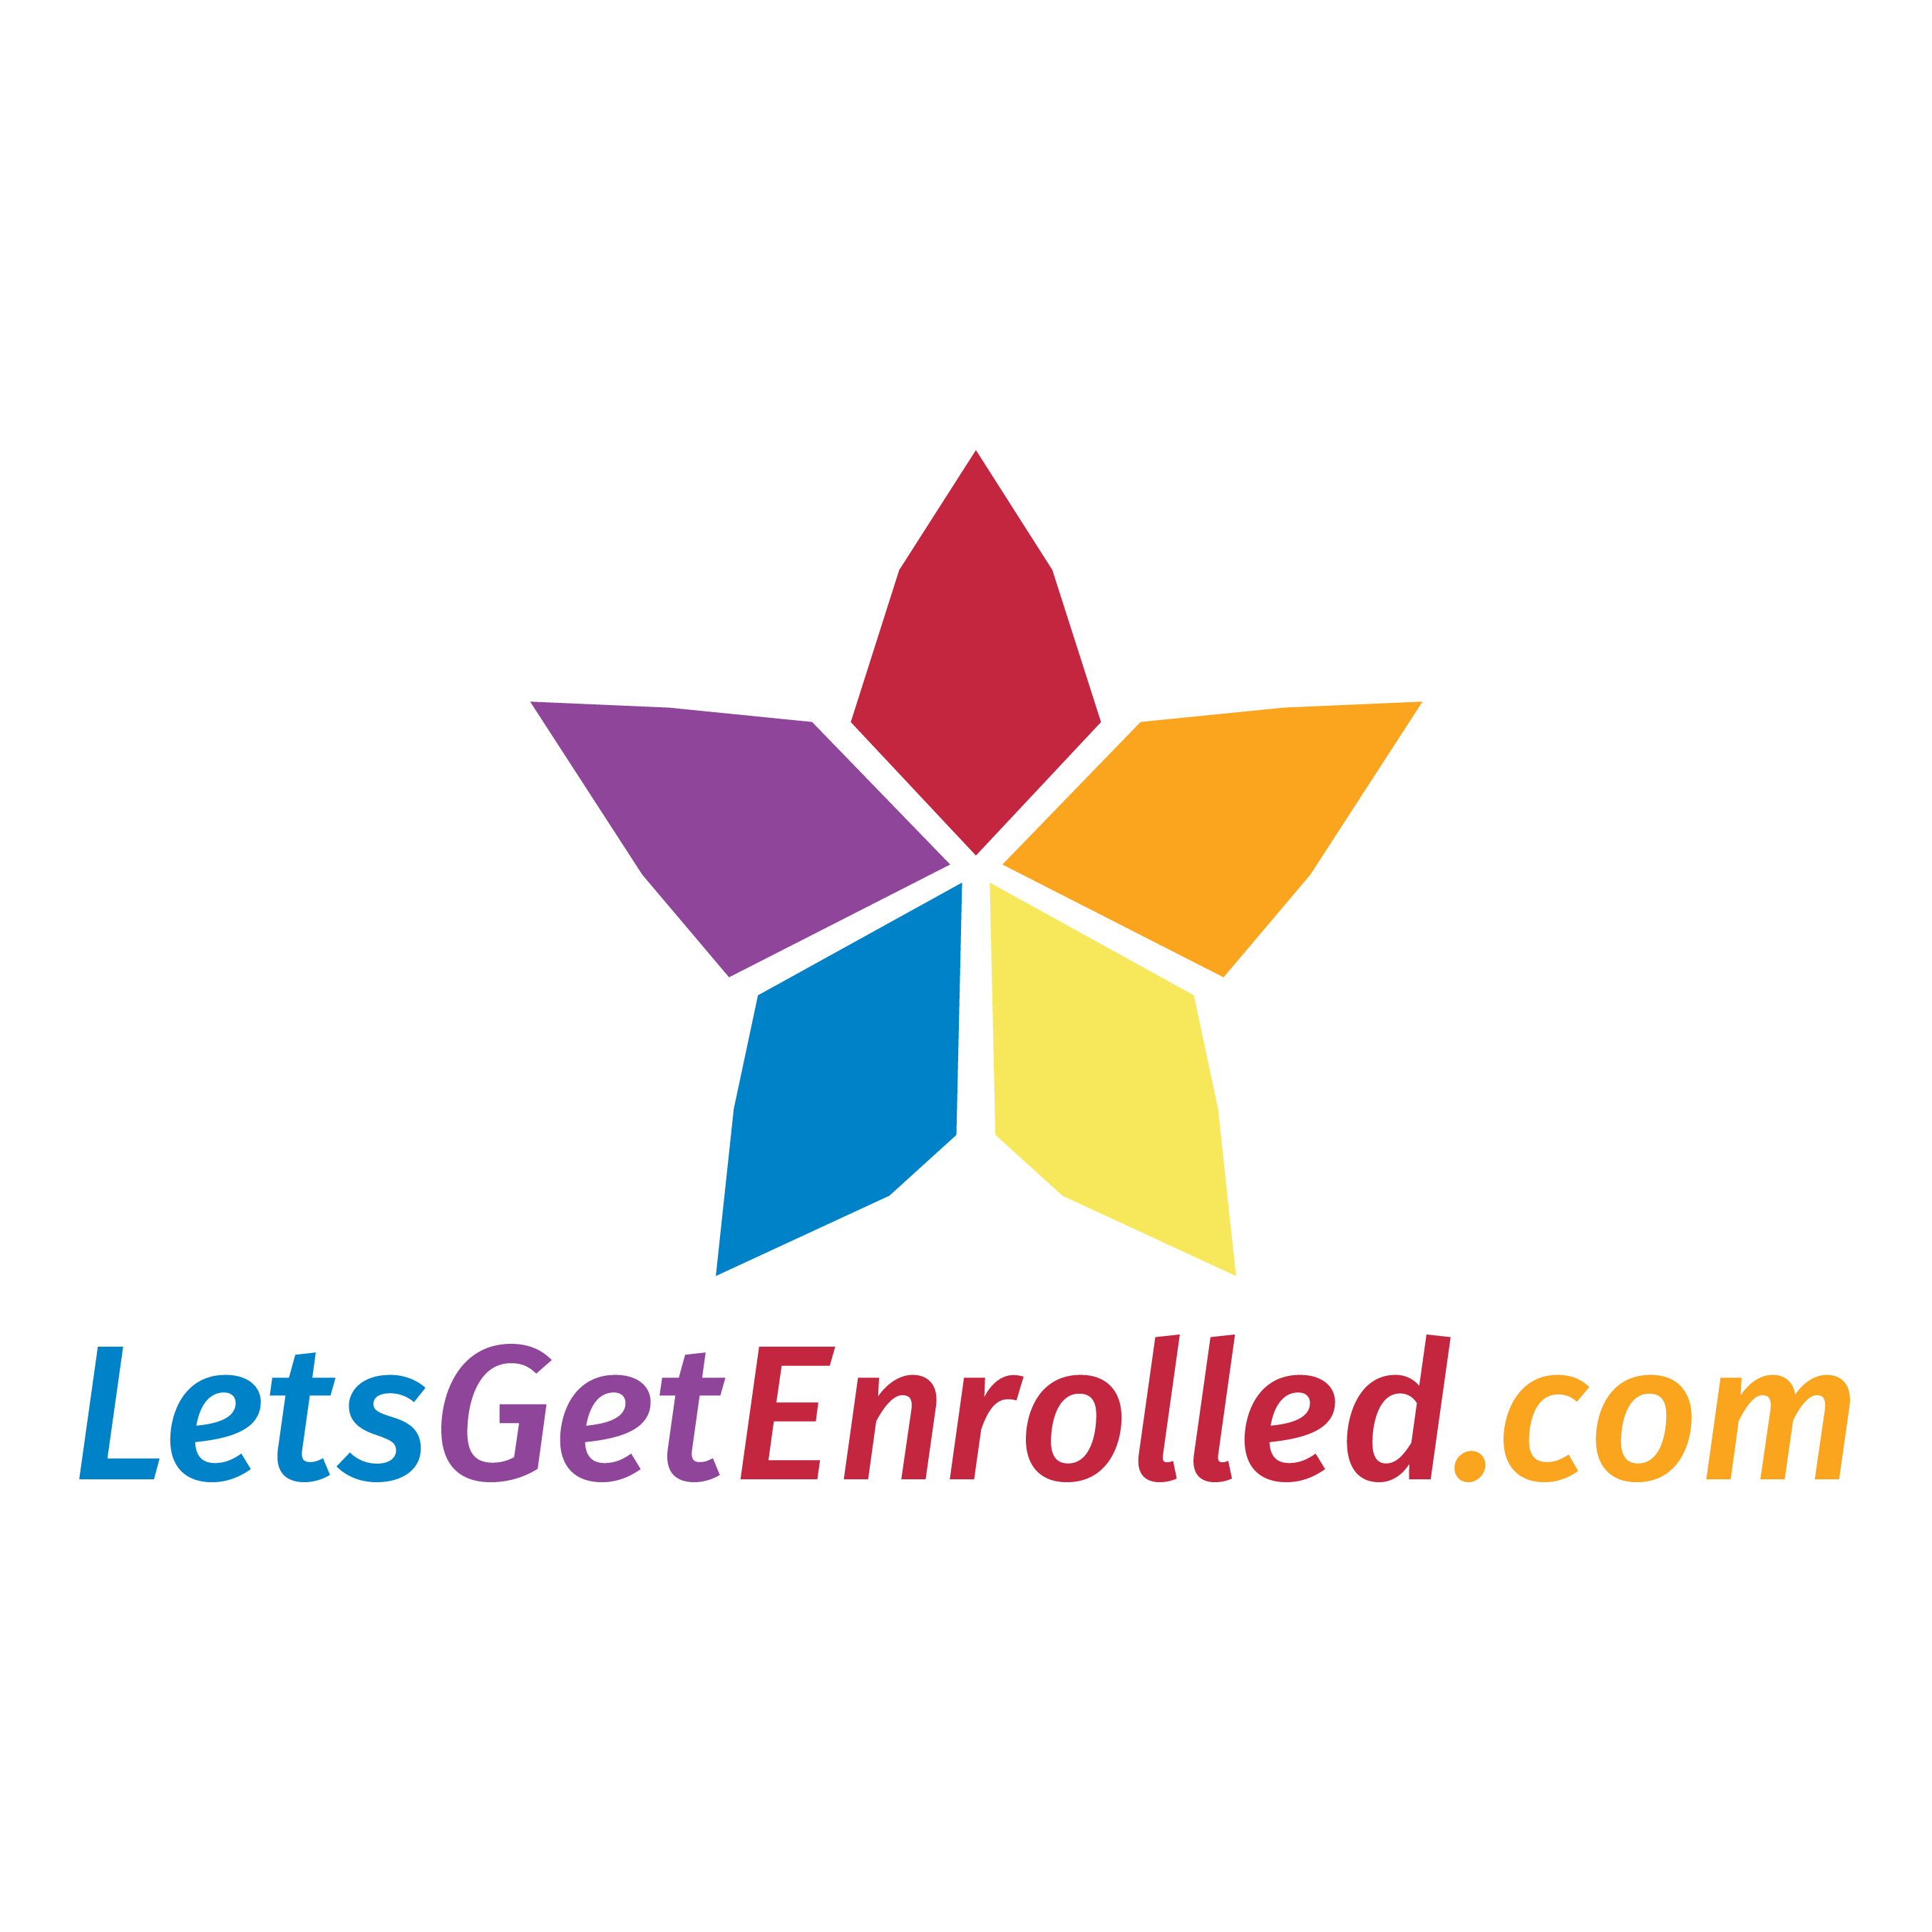 LetsGetEnrolled.com logo